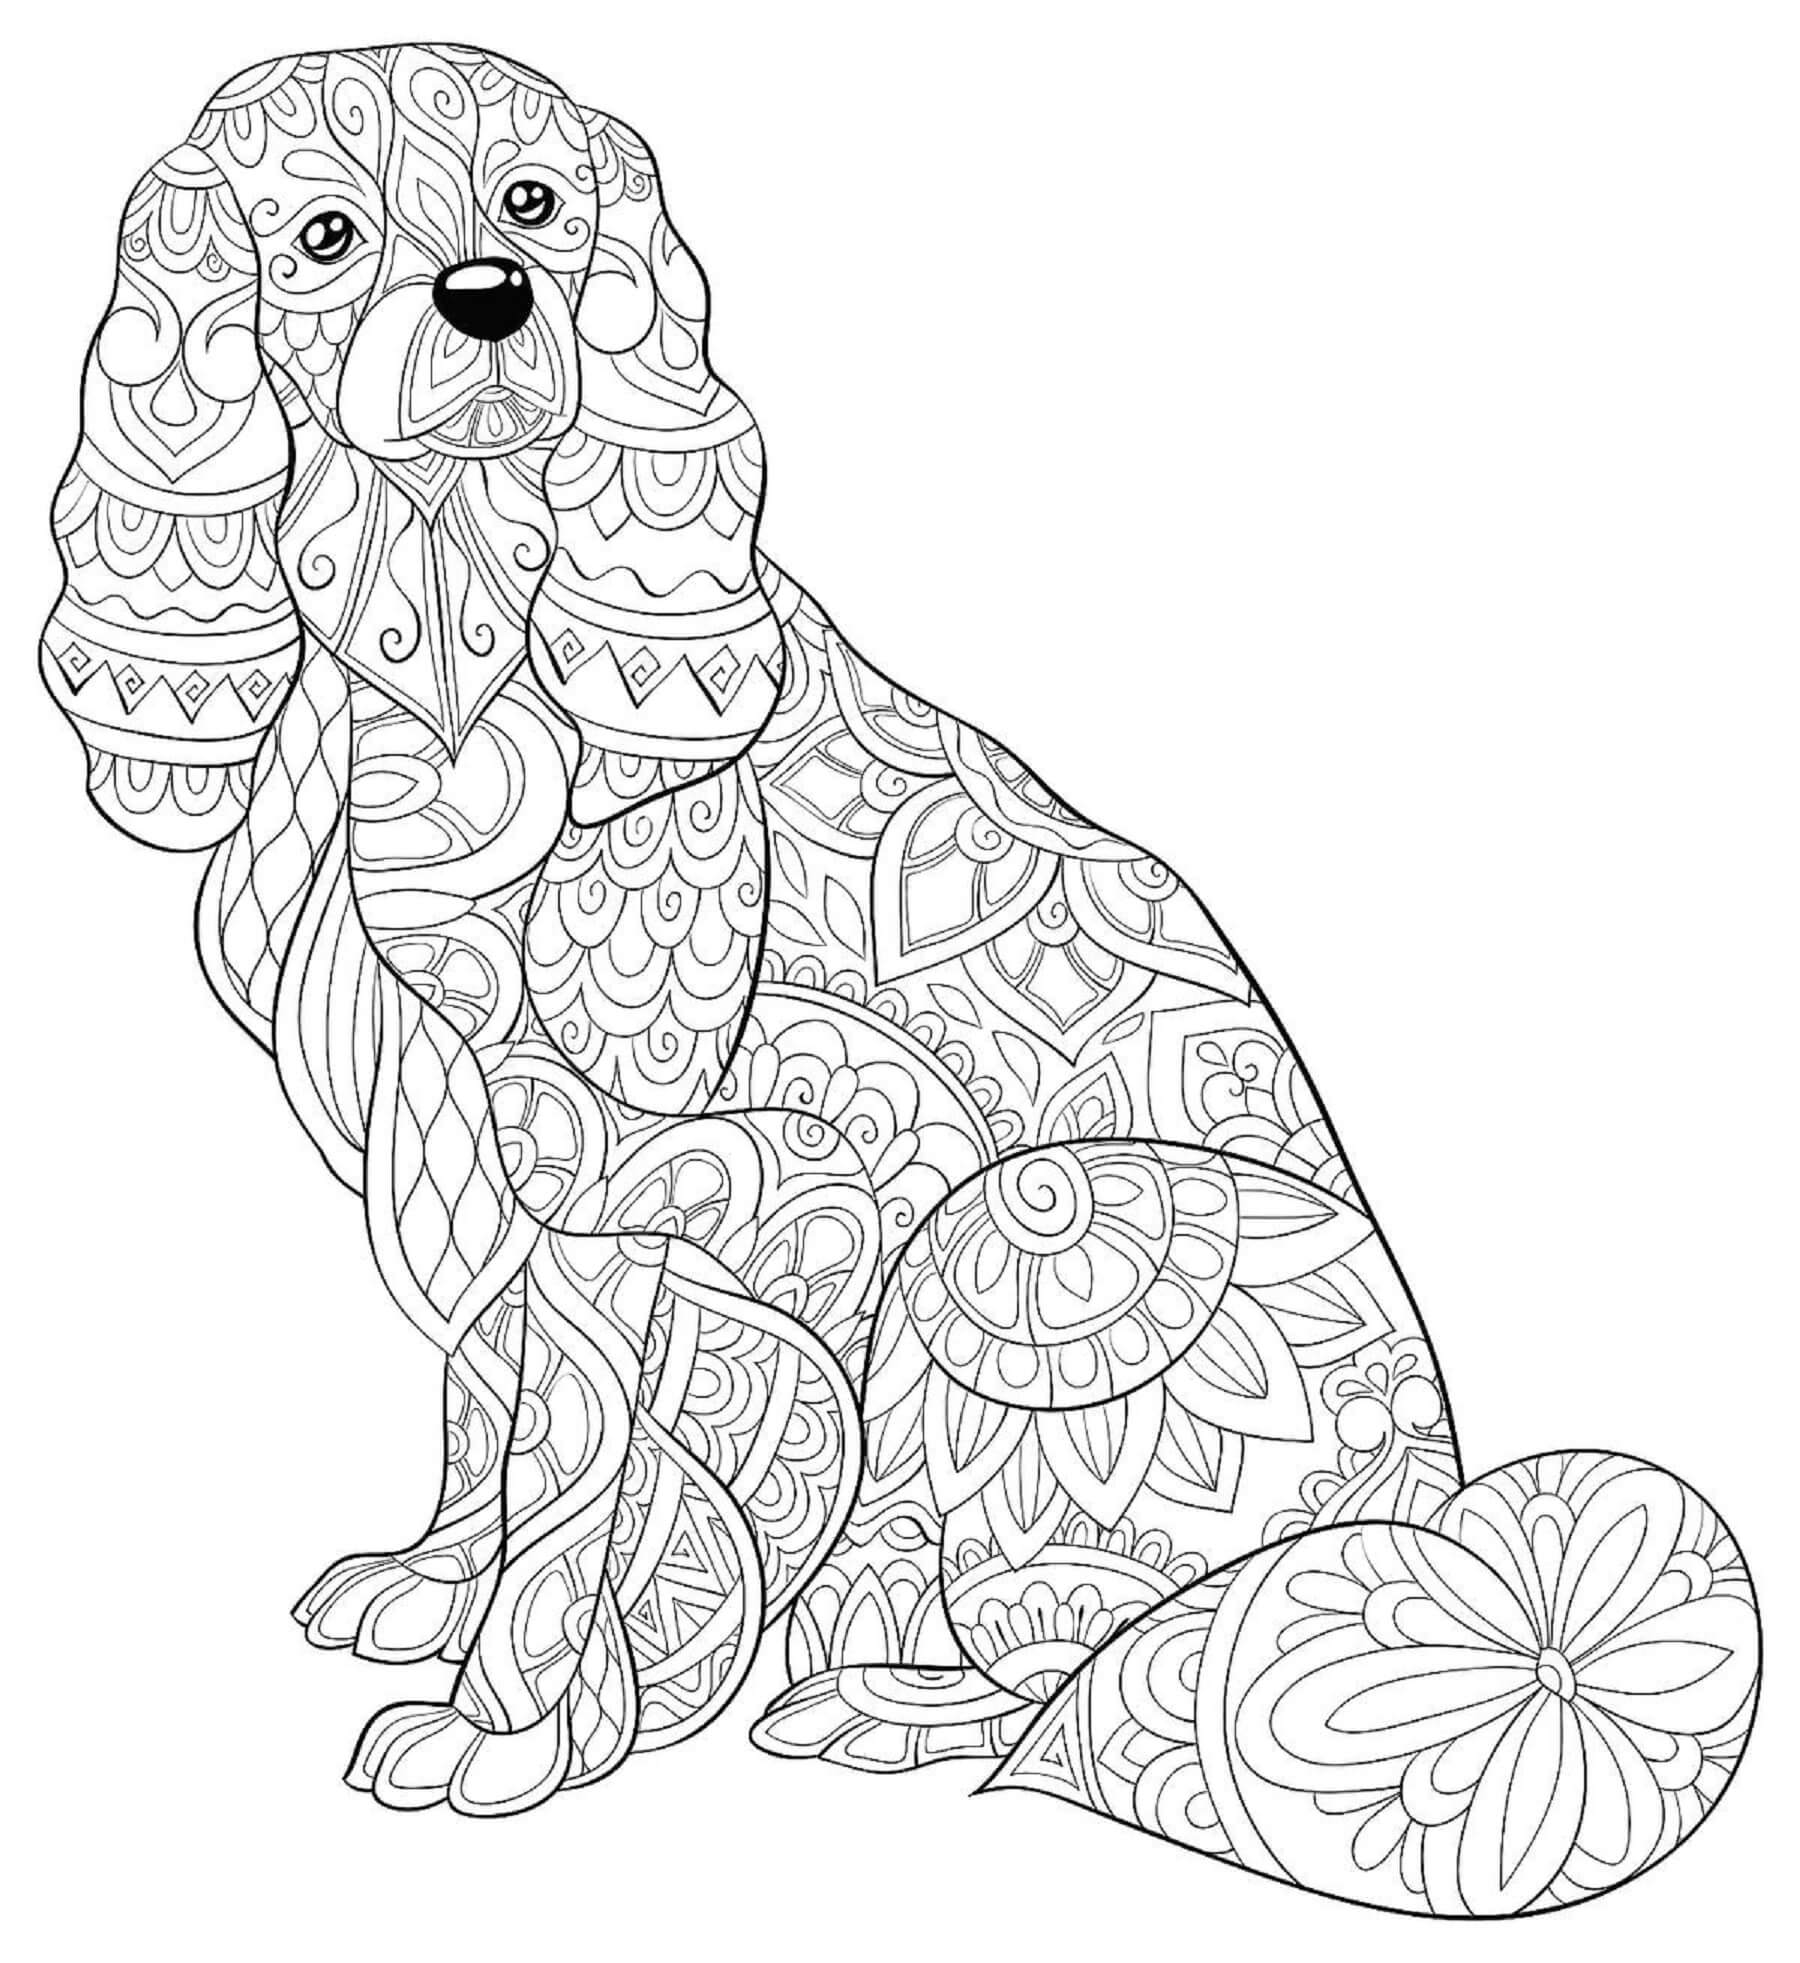 Dog Free Graphics Mandala coloring page - Download, Print or Color ...